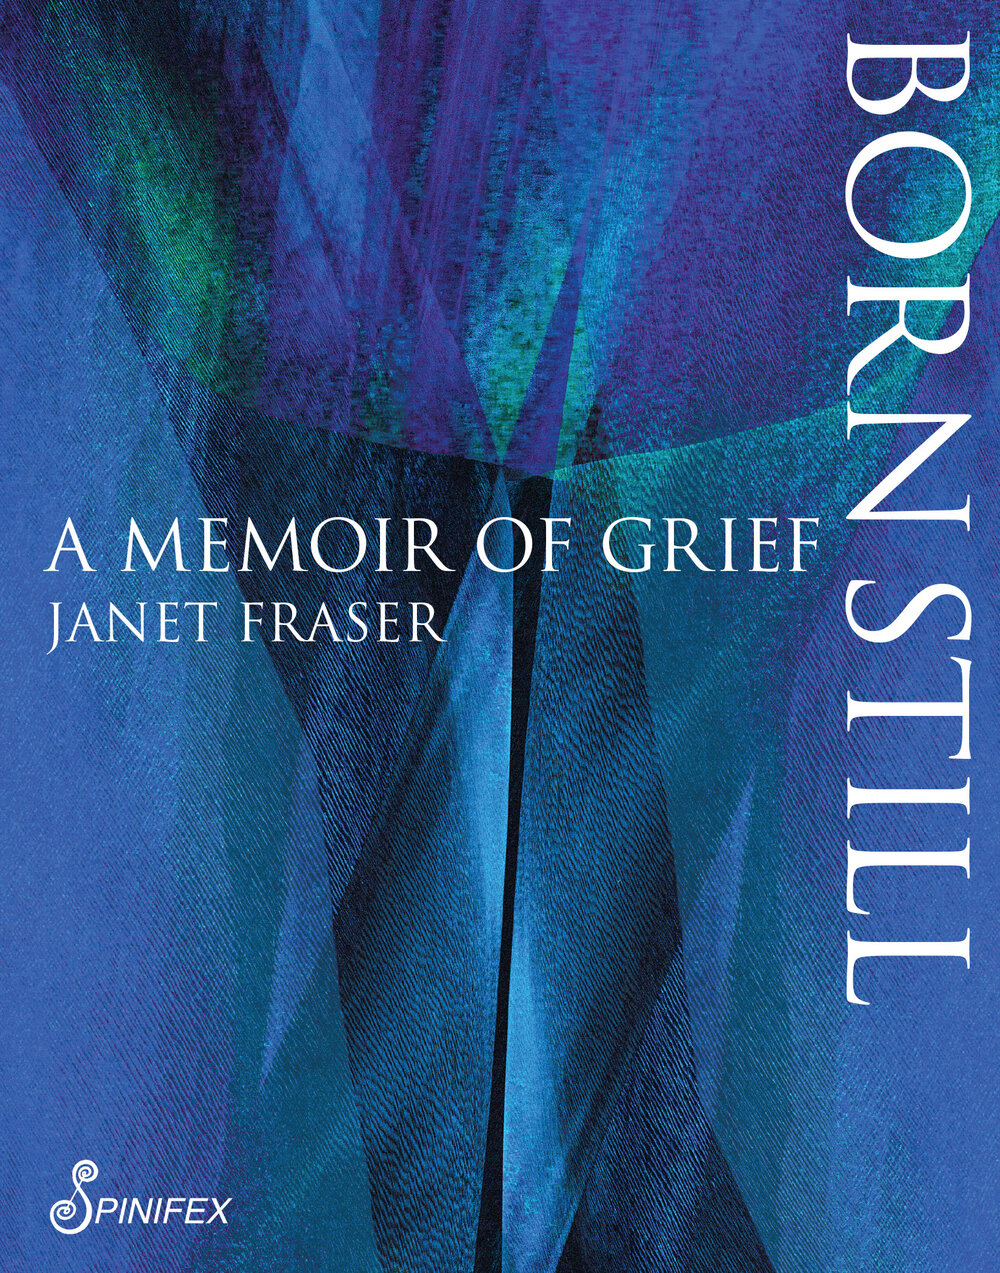 Born Still: A Memoir of Grief